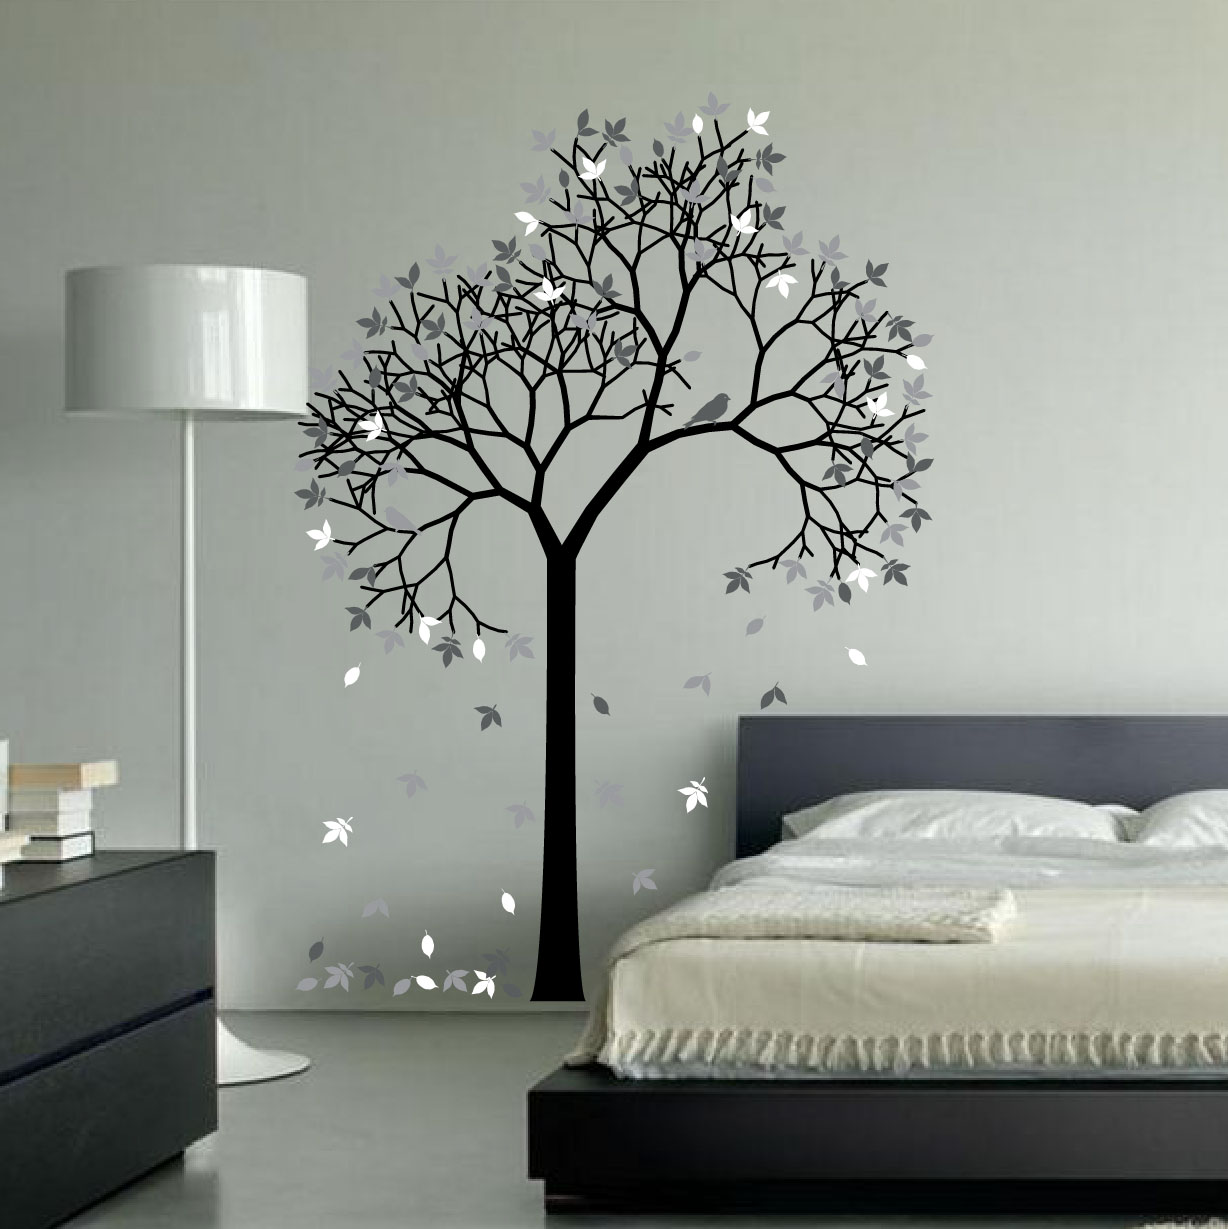 1267-tree-wall-decal-bedroom.jpg